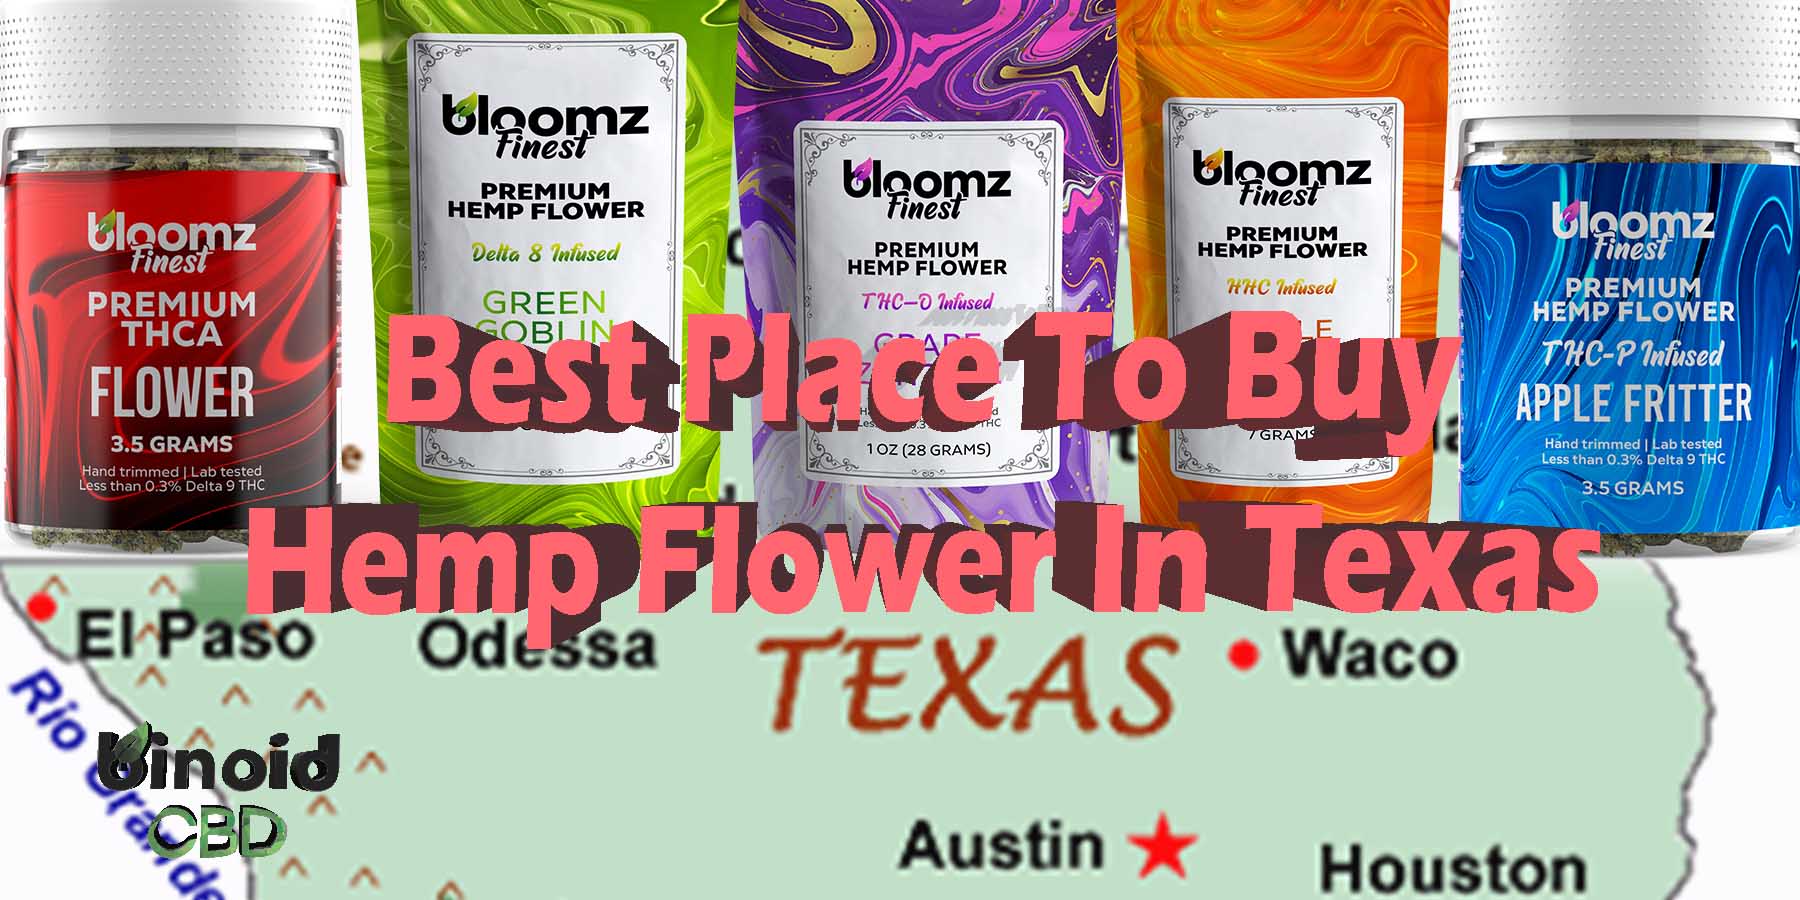 Buy Hemp Flower Texas PreRolls Caviar Cones Blunts Get Online Near Me For Sale Best Brand Strongest Real Legal Store Shop Reddit